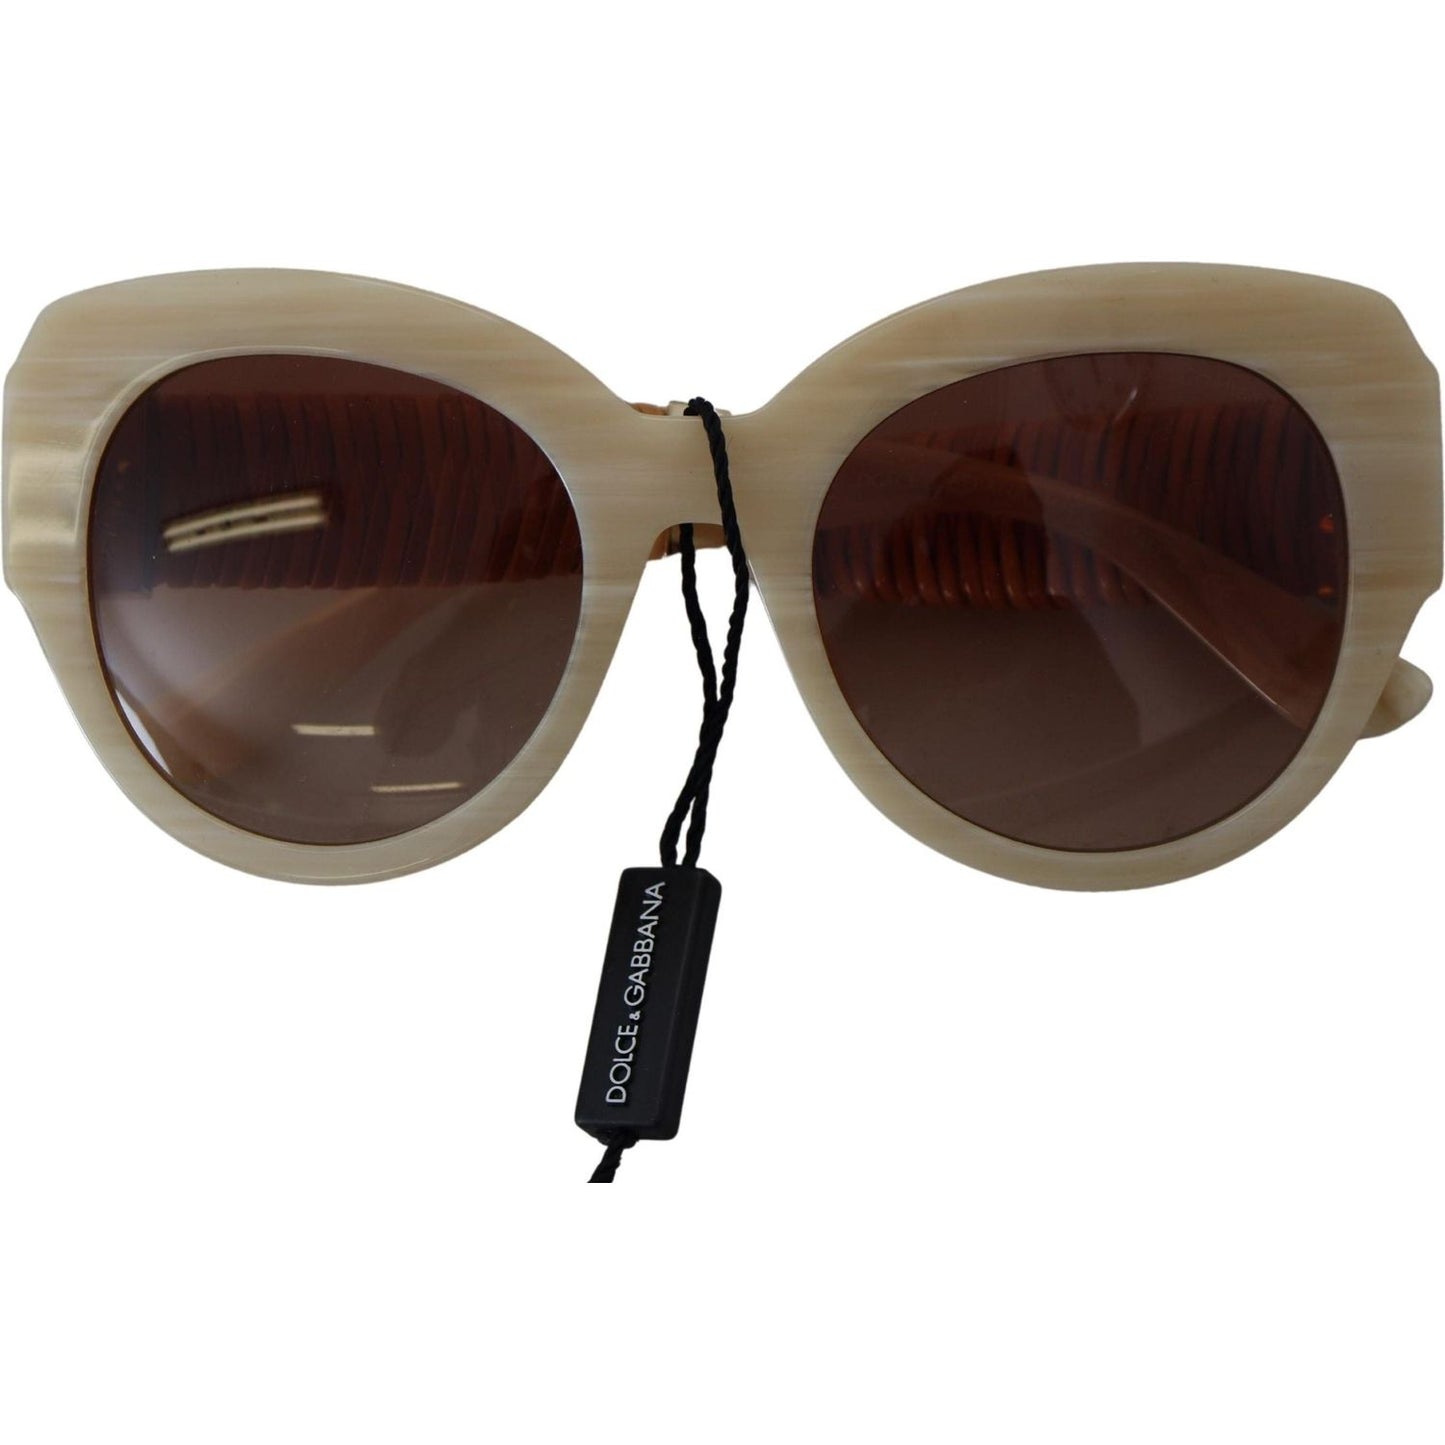 Dolce & Gabbana Beige Chic Acetate Women's Sunglasses beige-acetate-full-rim-brown-lense-dg4294-sunglasses IMG_4316-scaled-5d9e7c42-f73.jpg